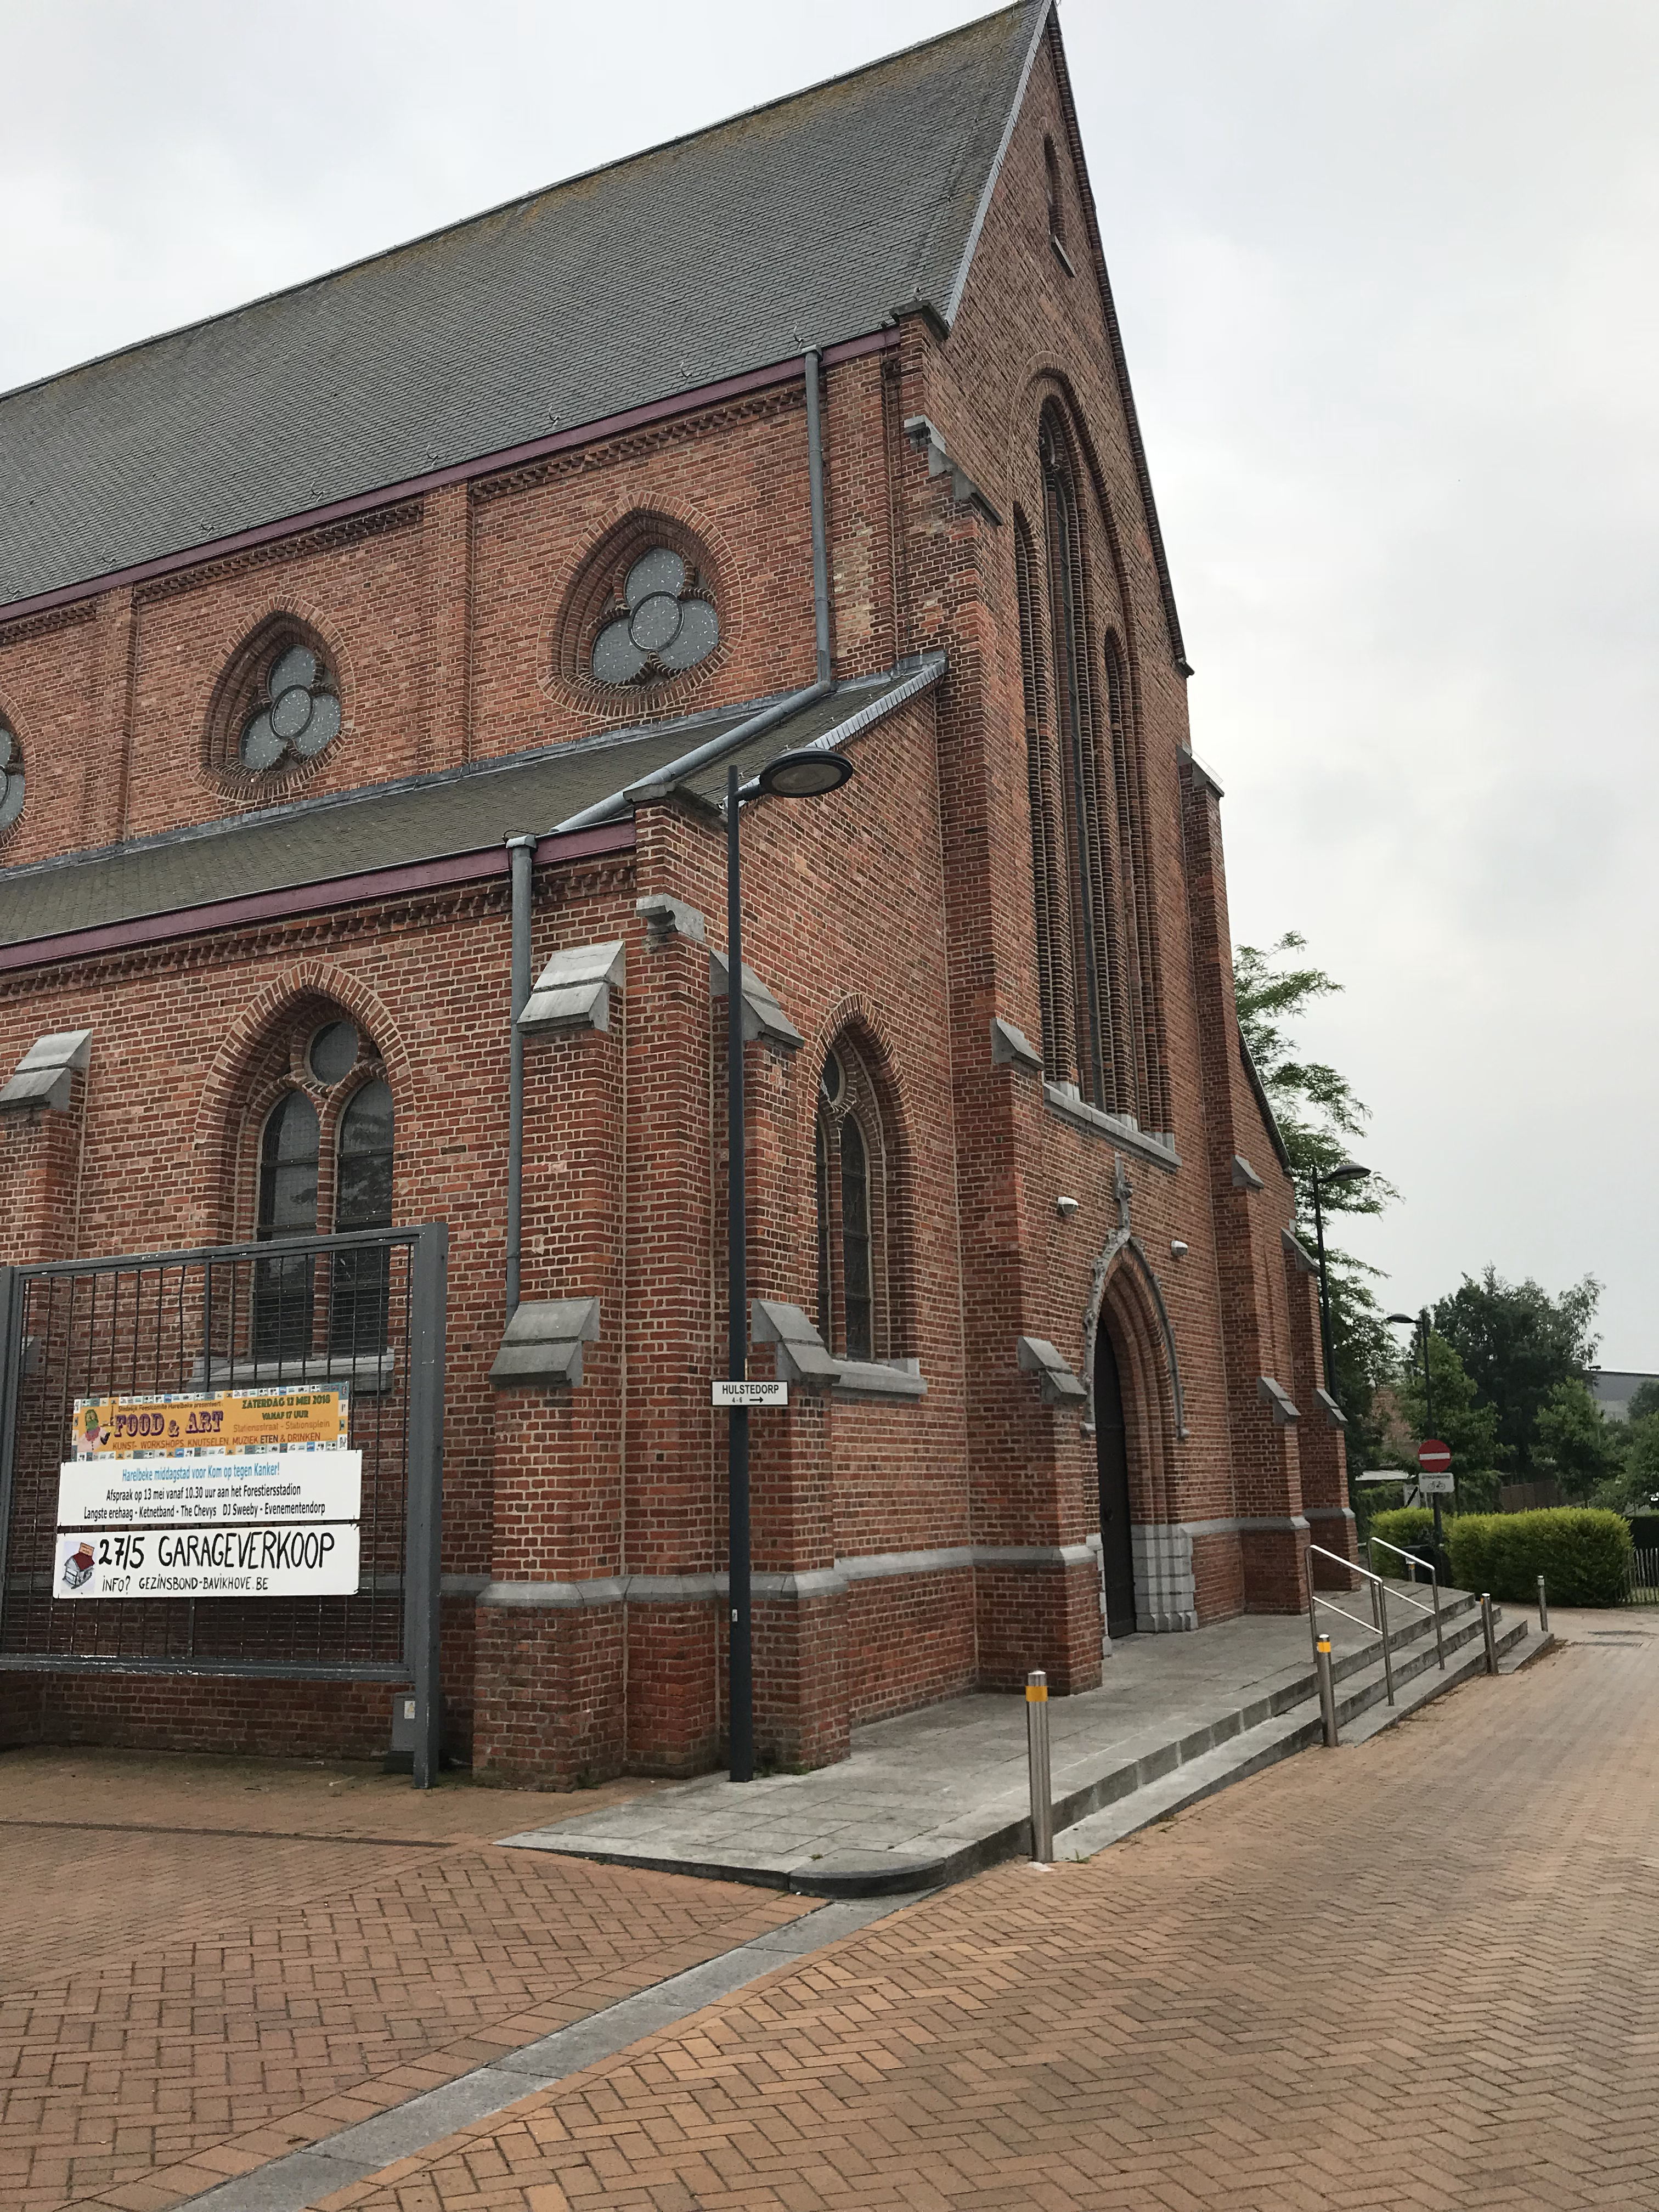 Sint-Petruskerk Hulste